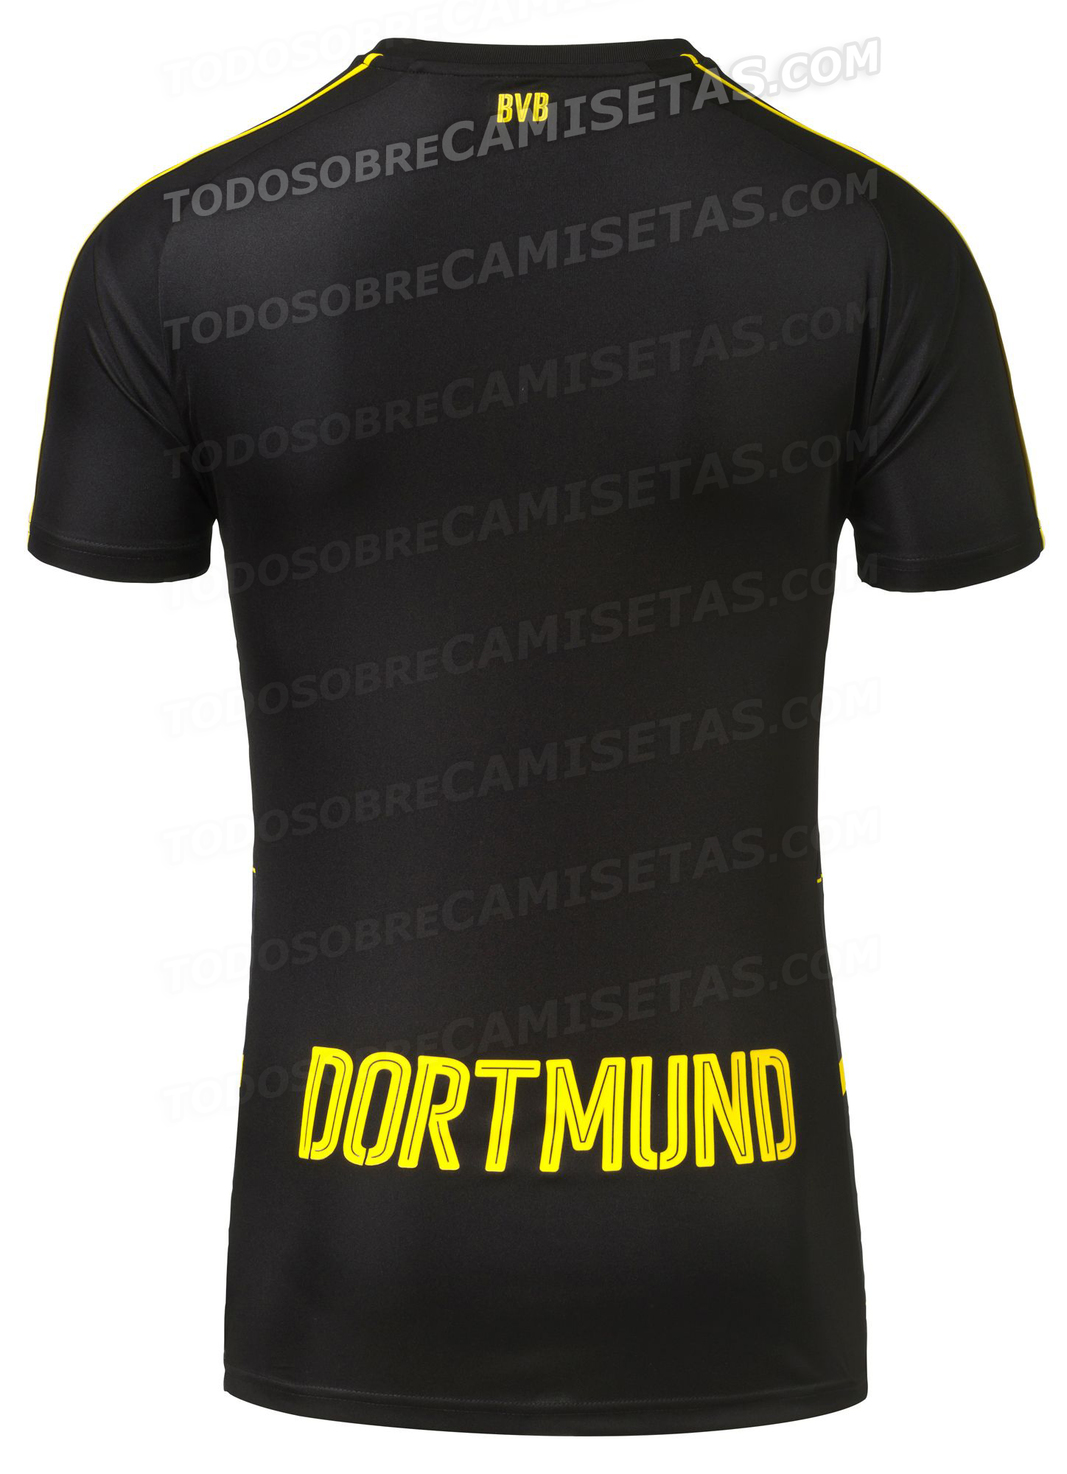 Borussia Dortmund 16 17 Puma away kit LEAKED